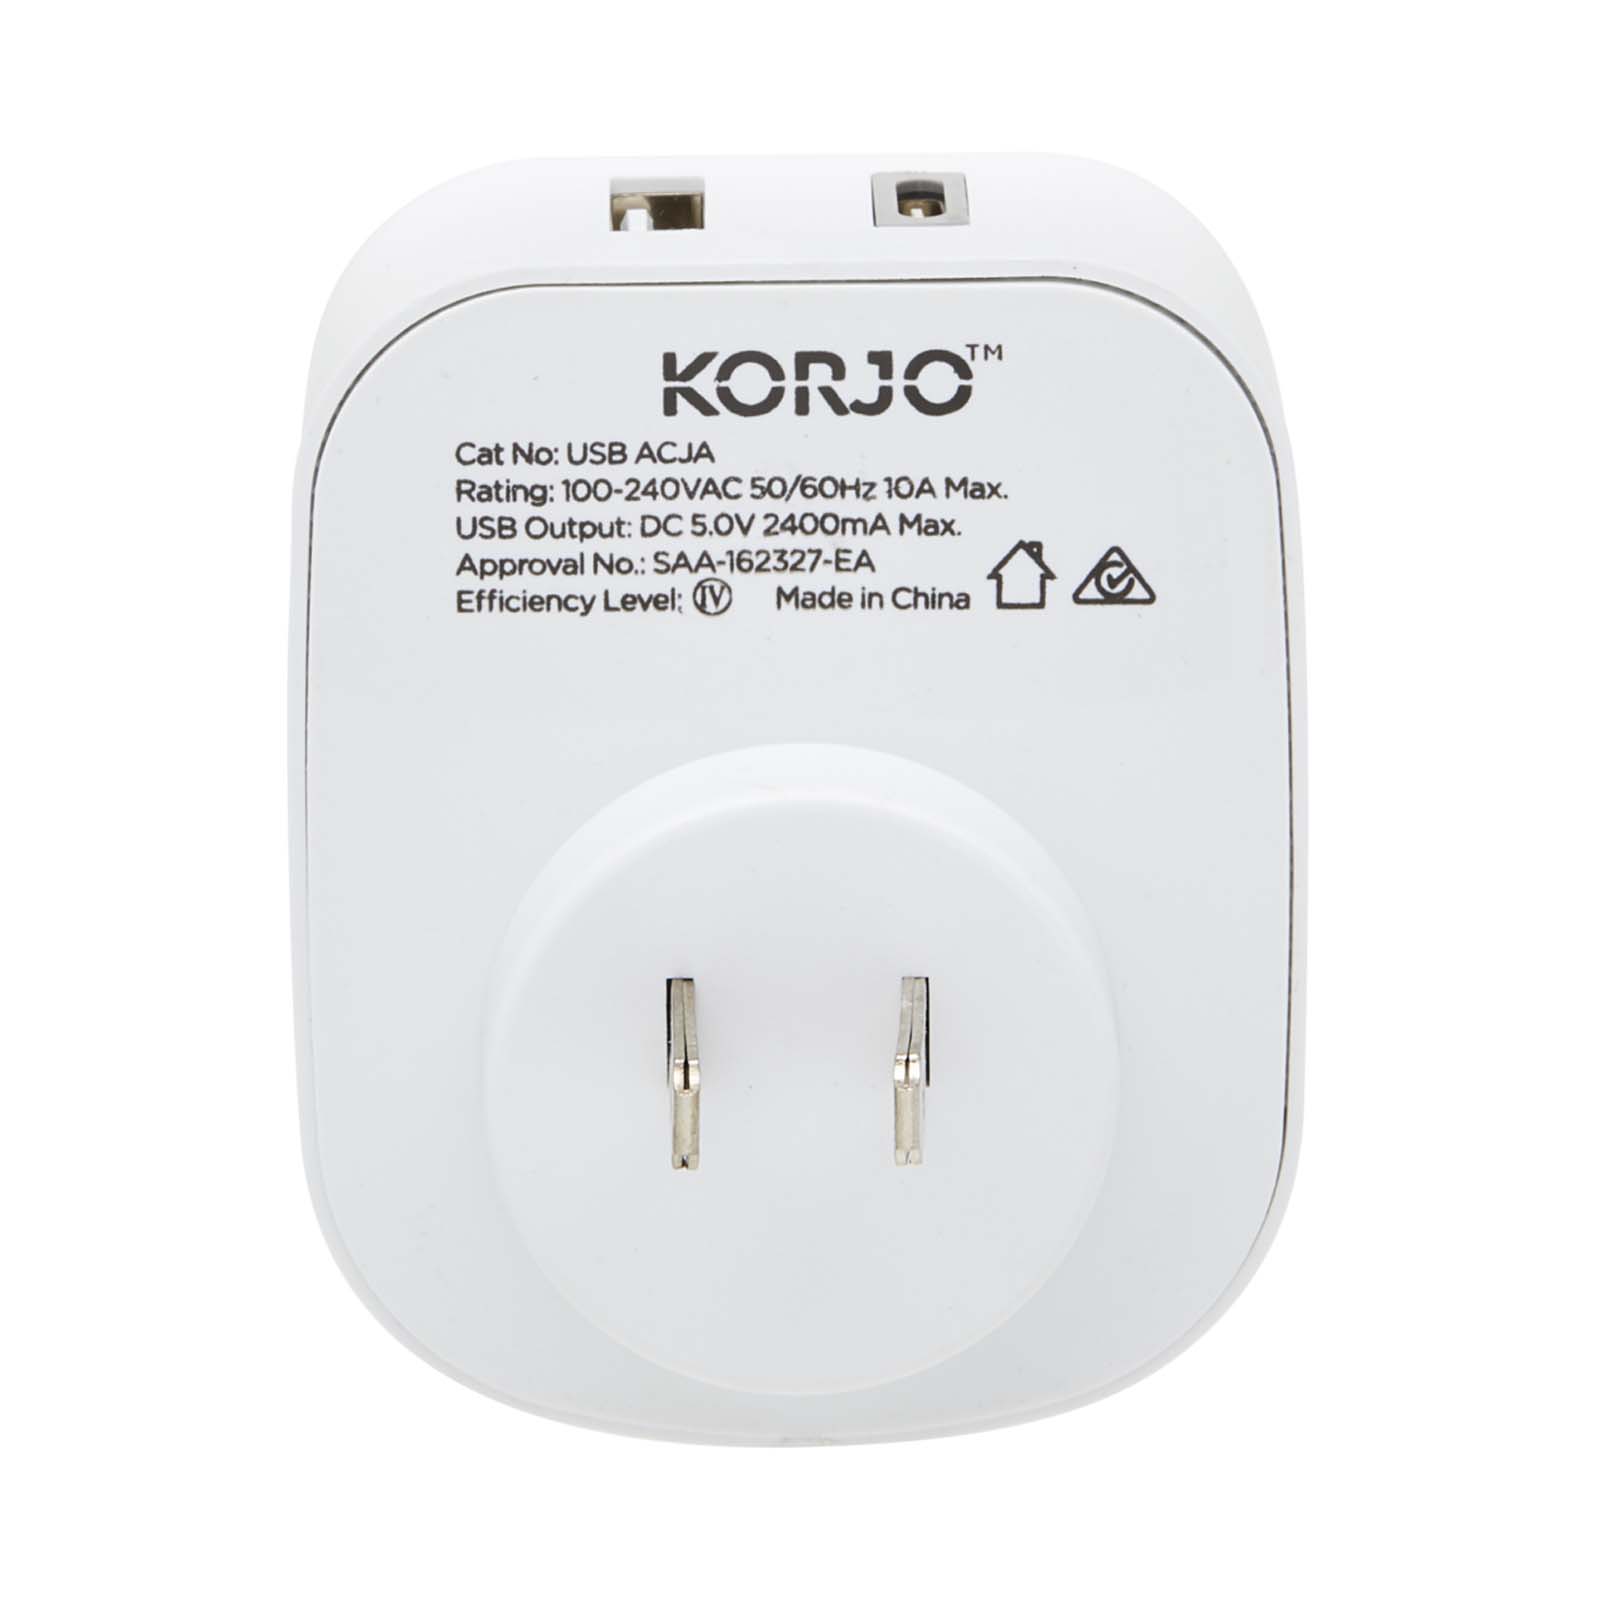 Korjo-Travel-Adaptor-Usb-Port-A-And-C-Australia-To-Japan-Plug